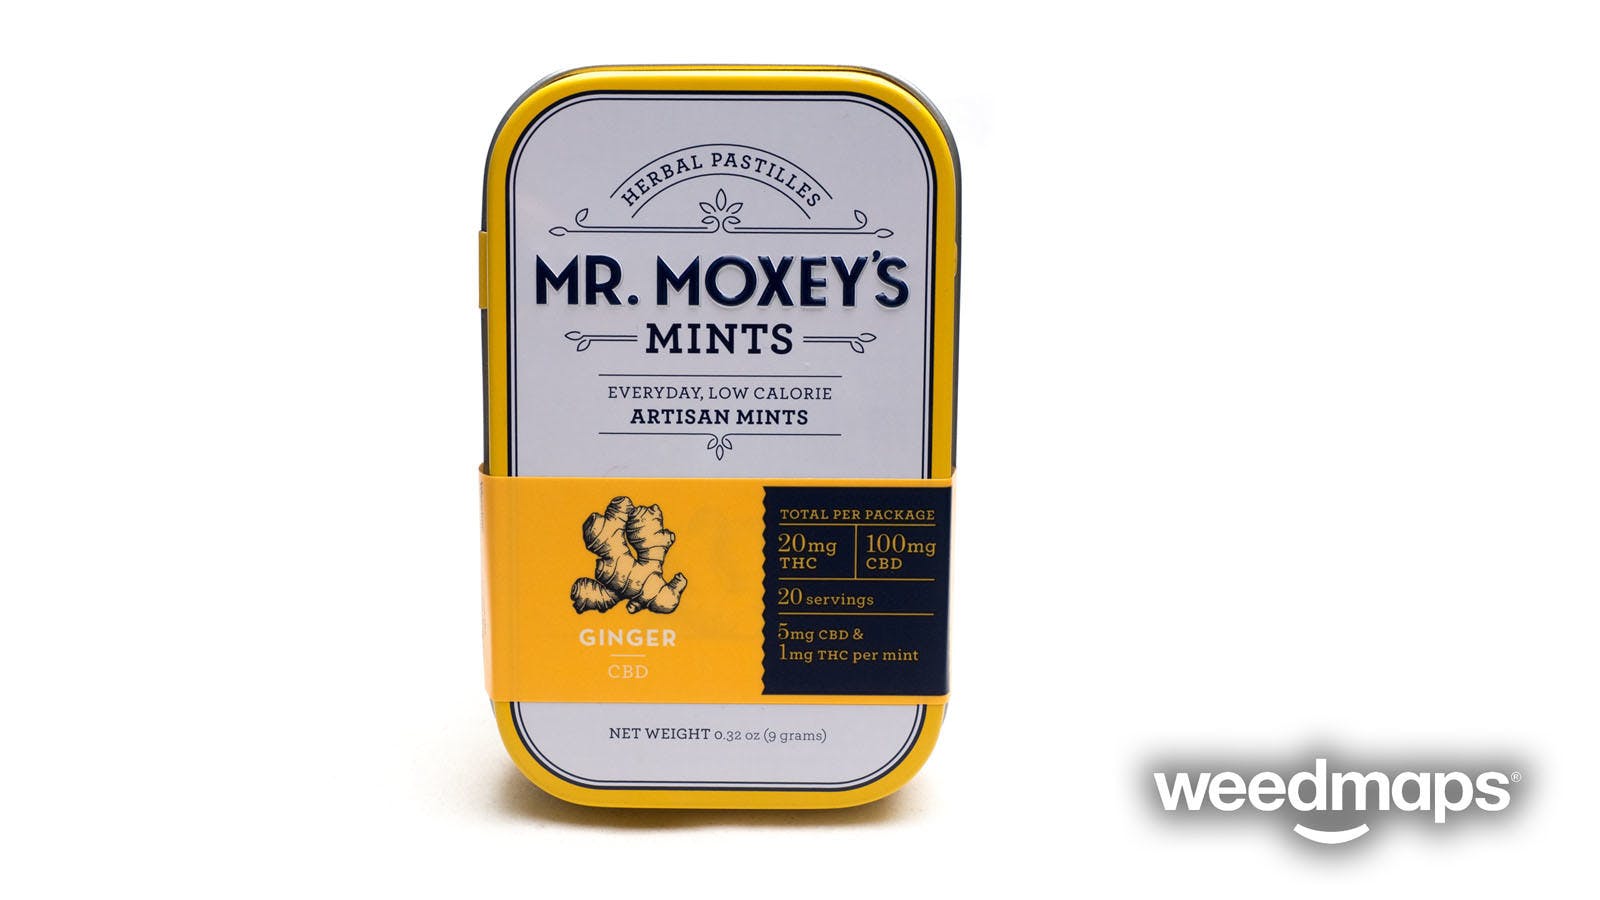 Mr. Moxey's Mints - CBD Ginger